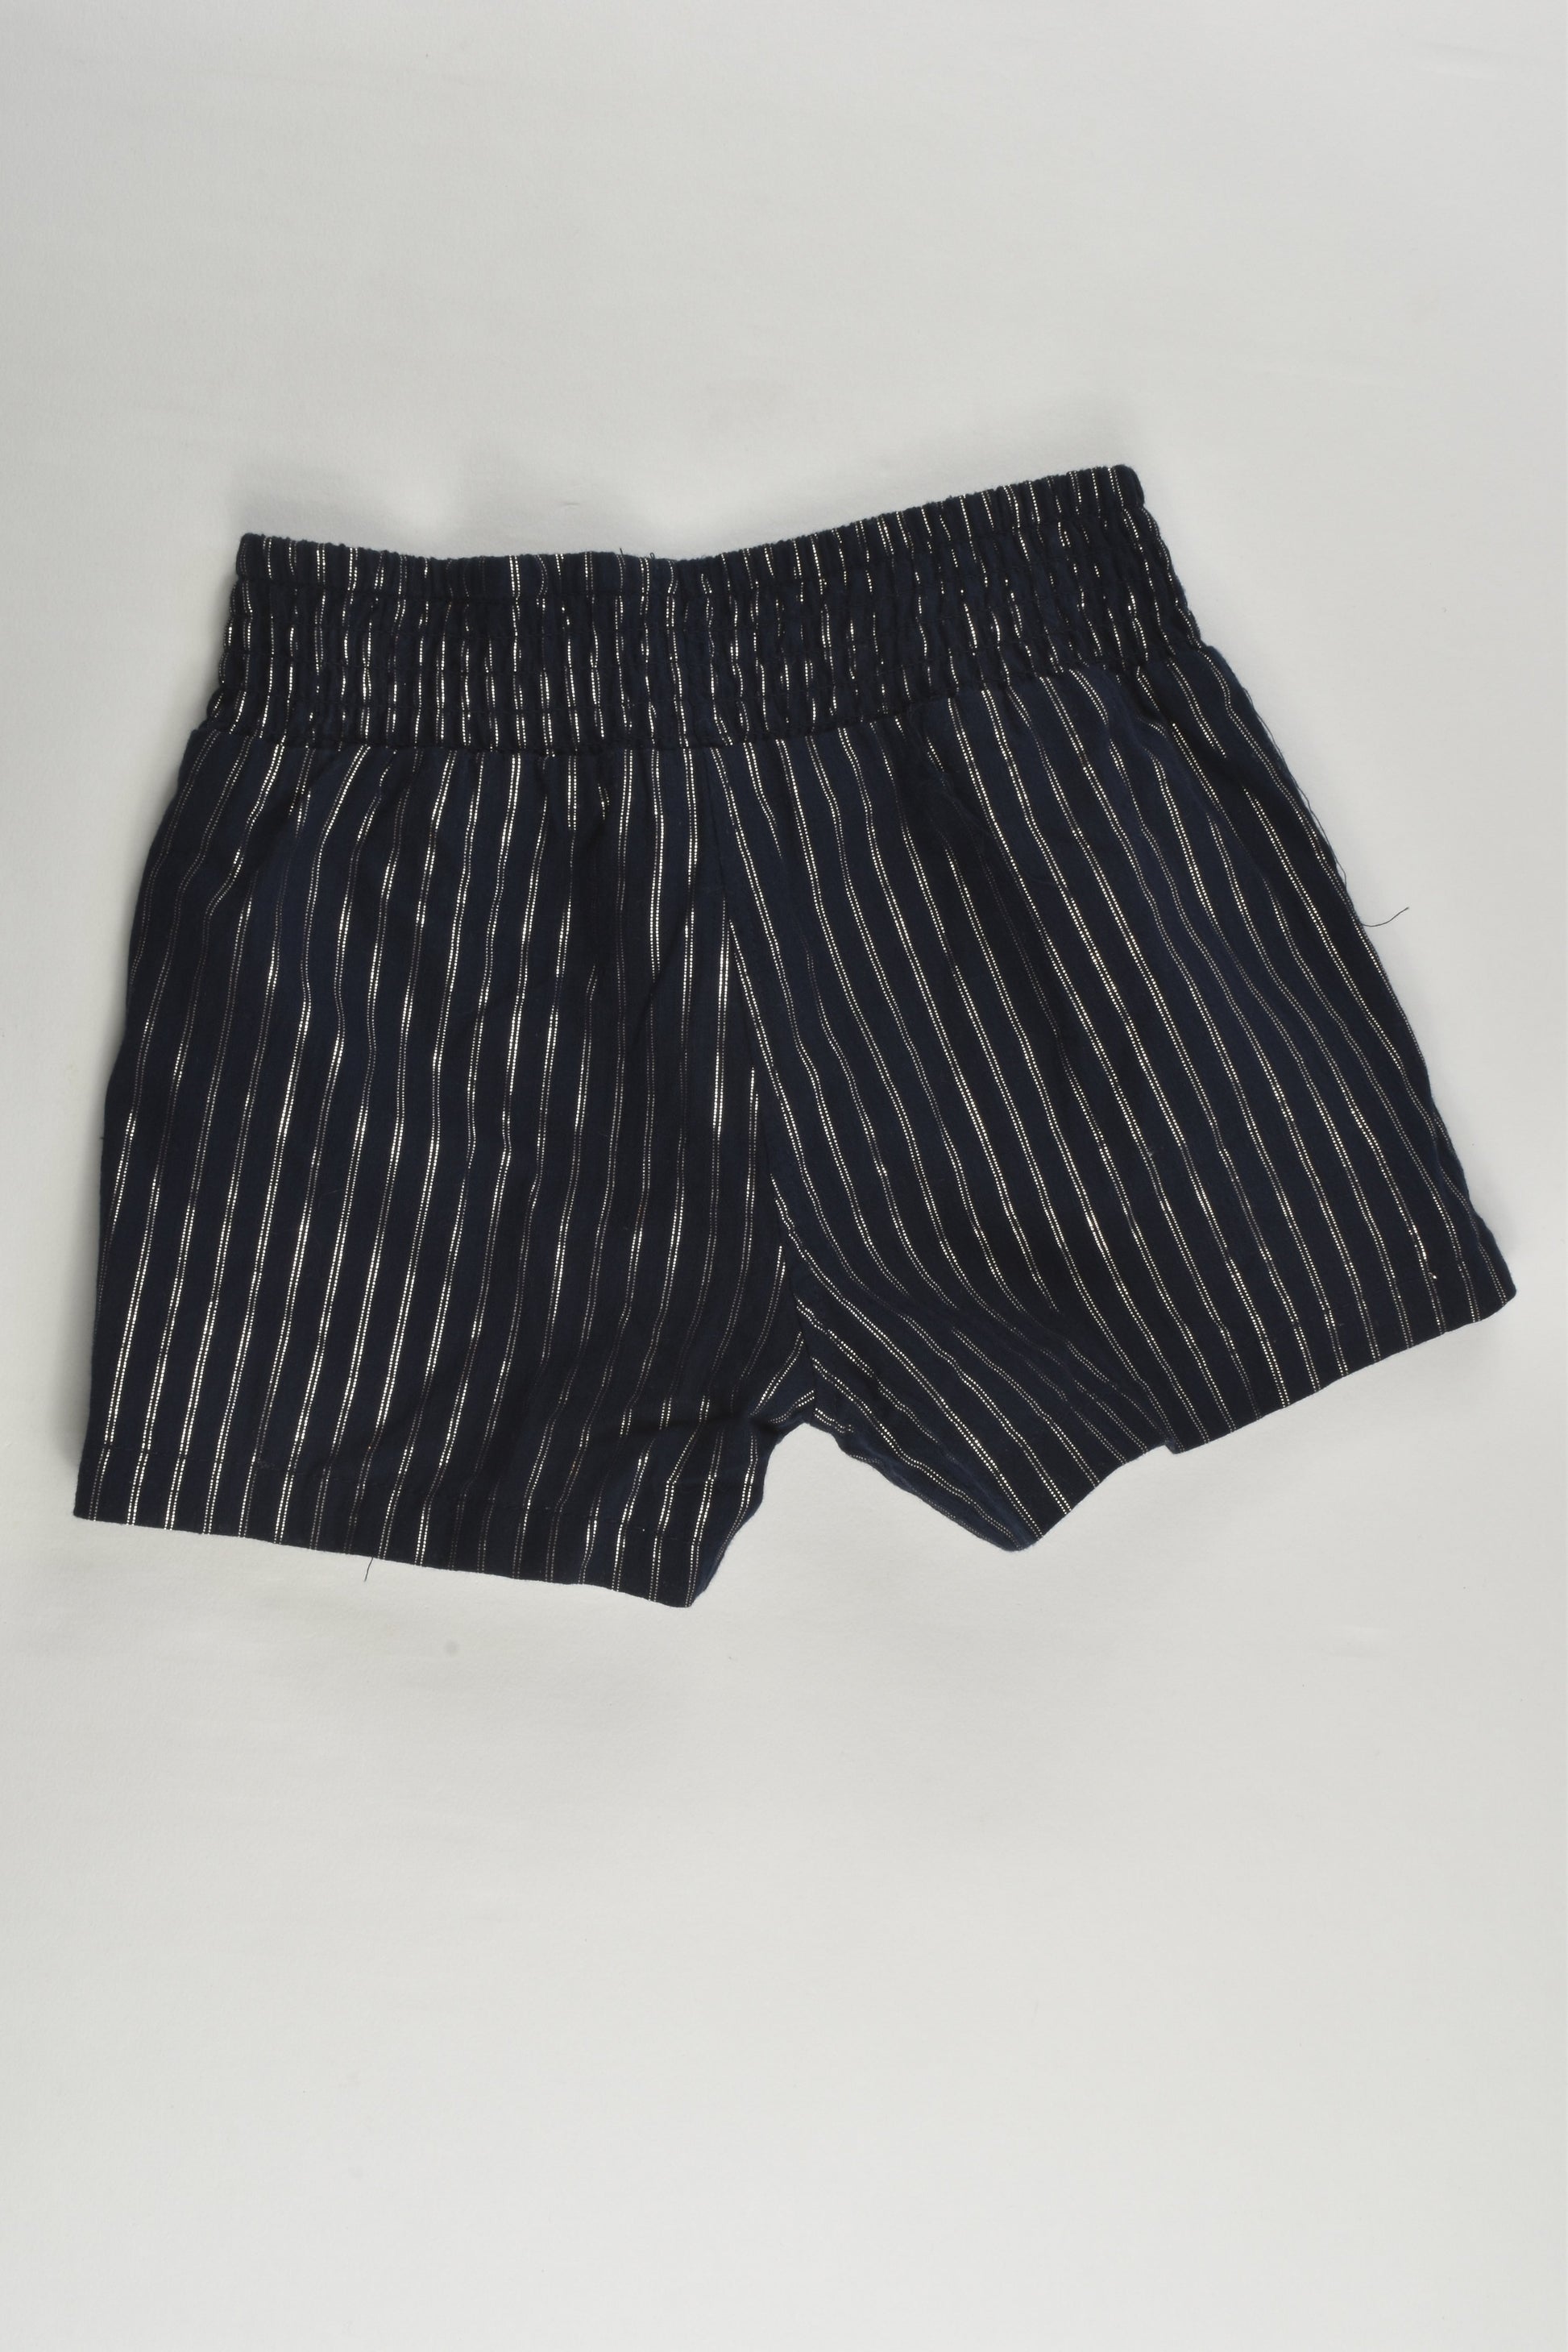 Anko Size 3 Lined Metallic Stripes Shorts